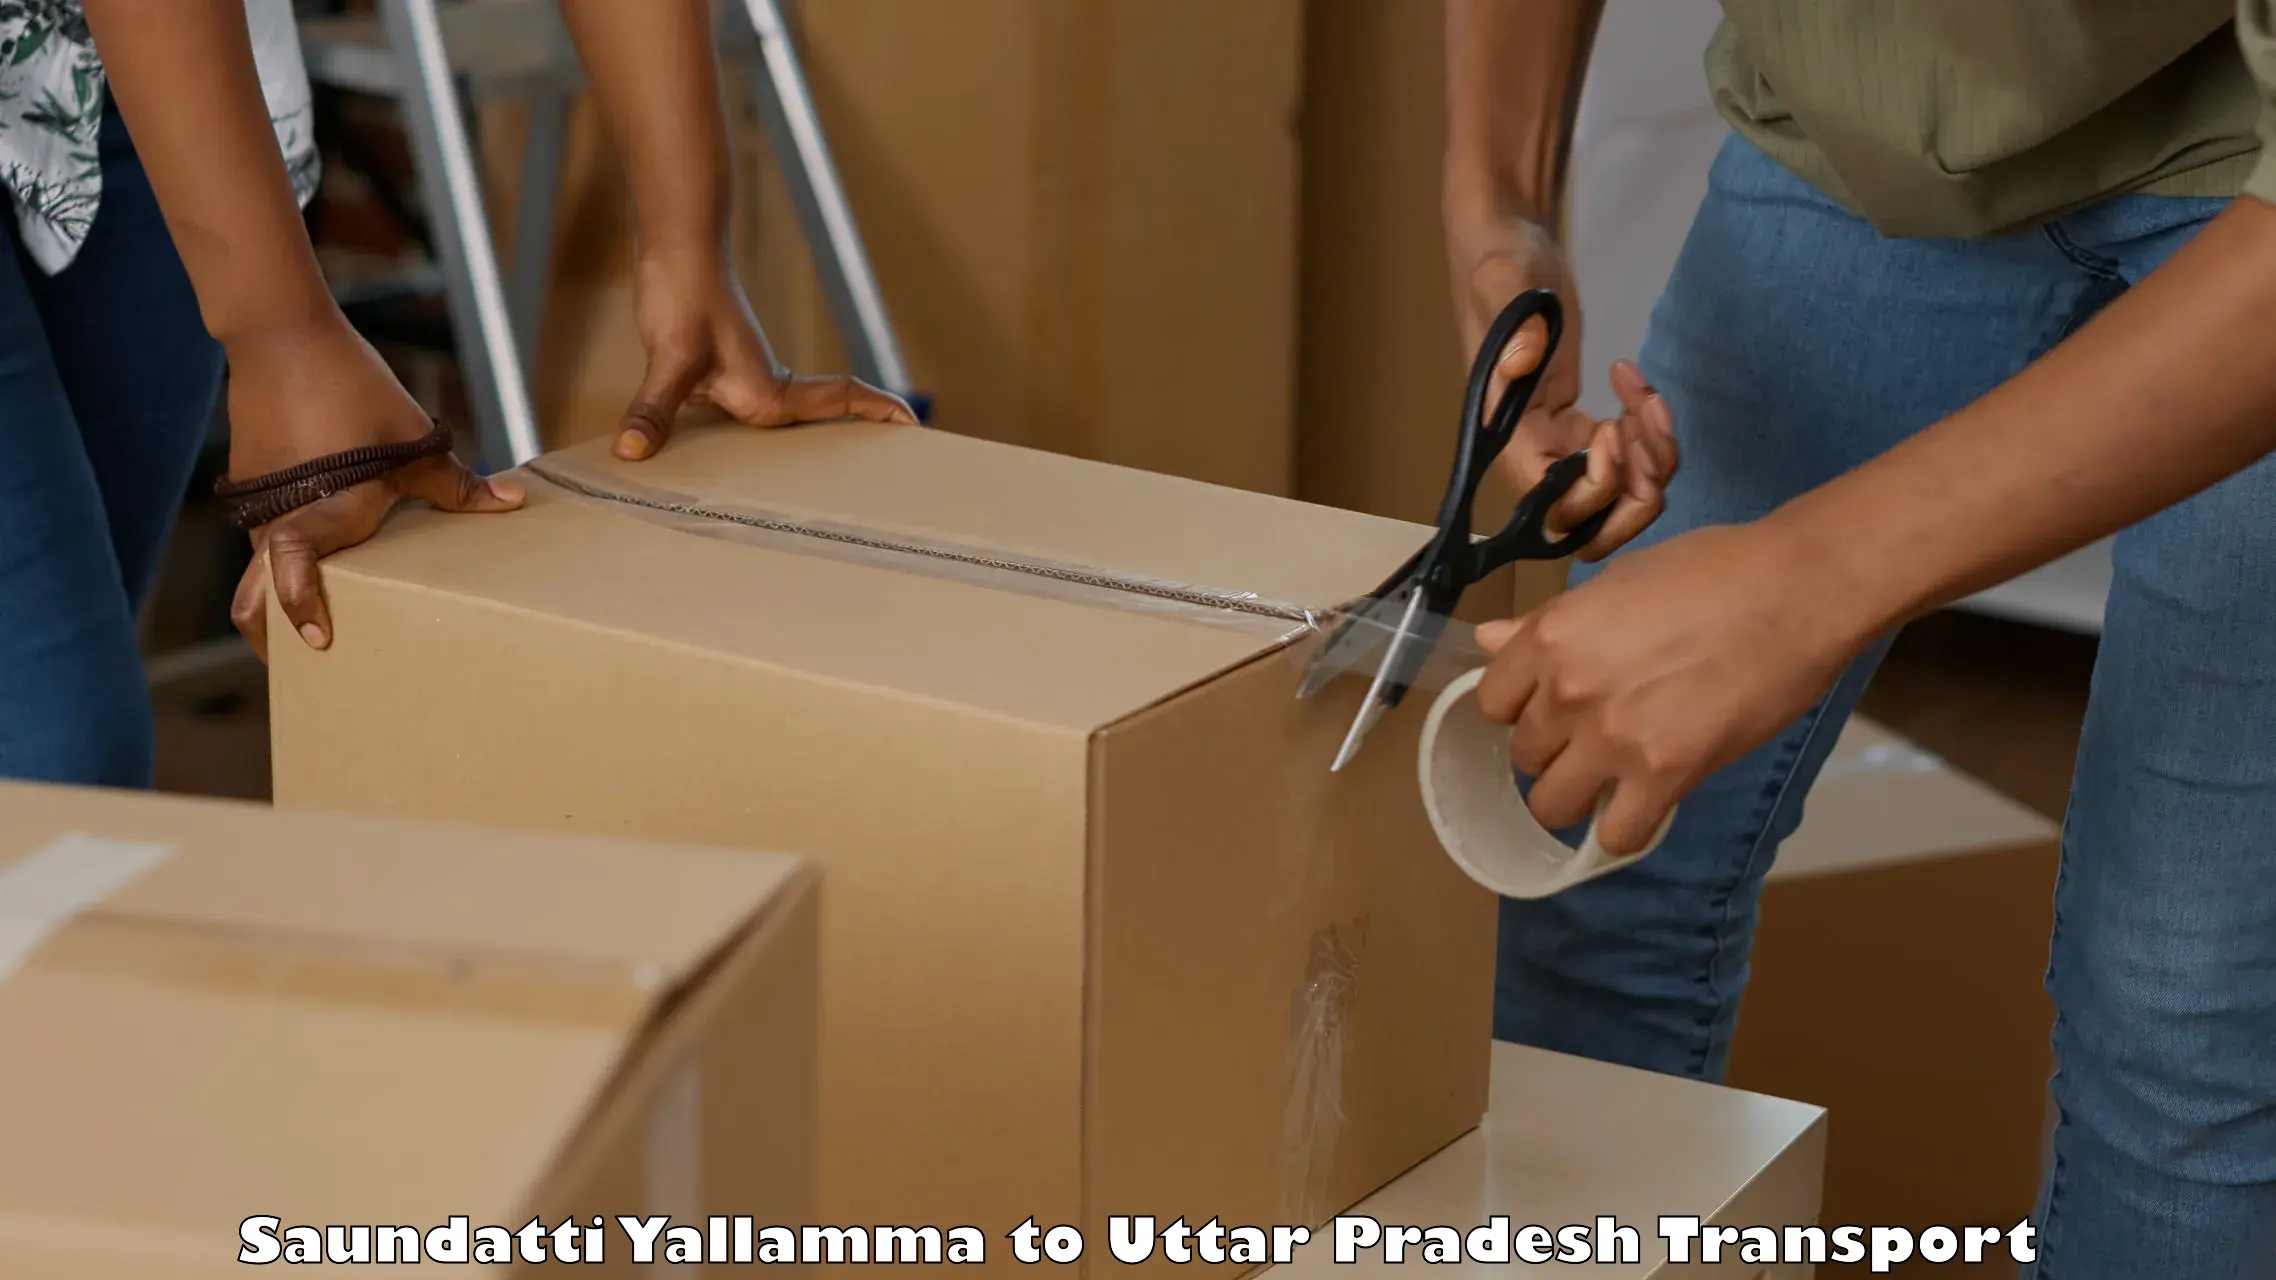 Delivery service Saundatti Yallamma to Uttar Pradesh